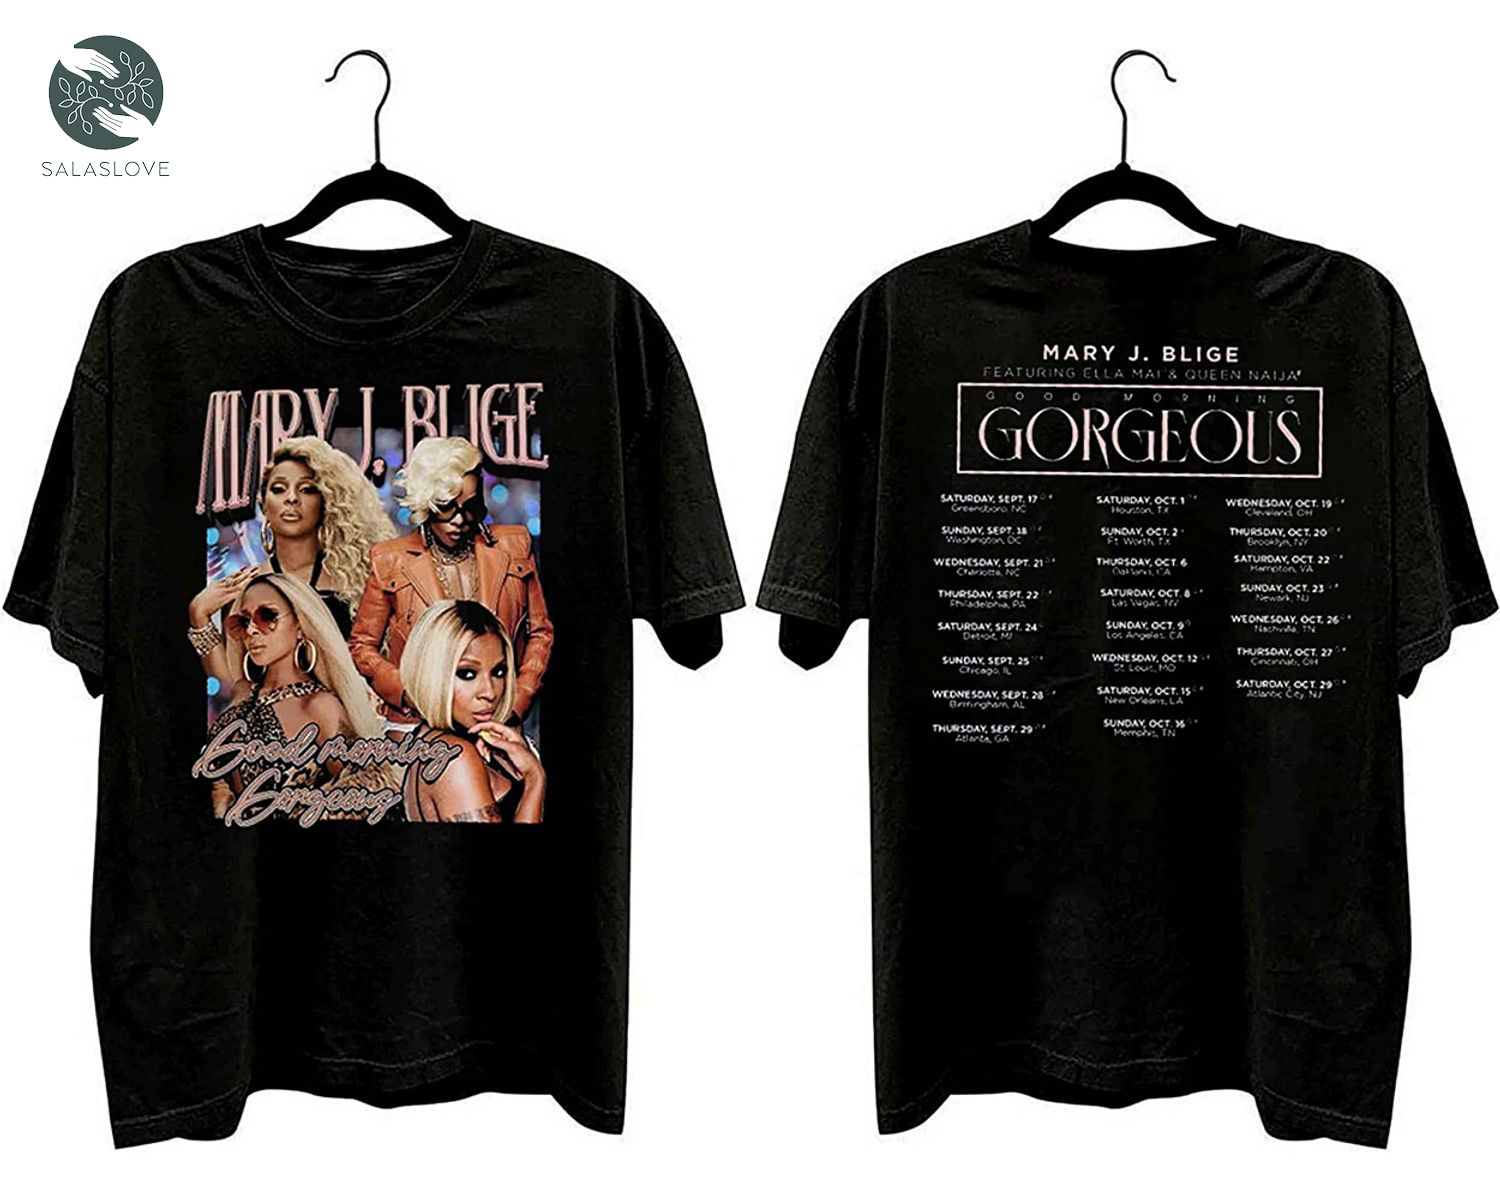 Mary J. Blige 33rd Anniversary Shirts 2022 Good Morning Gorgeous Tour Shirts